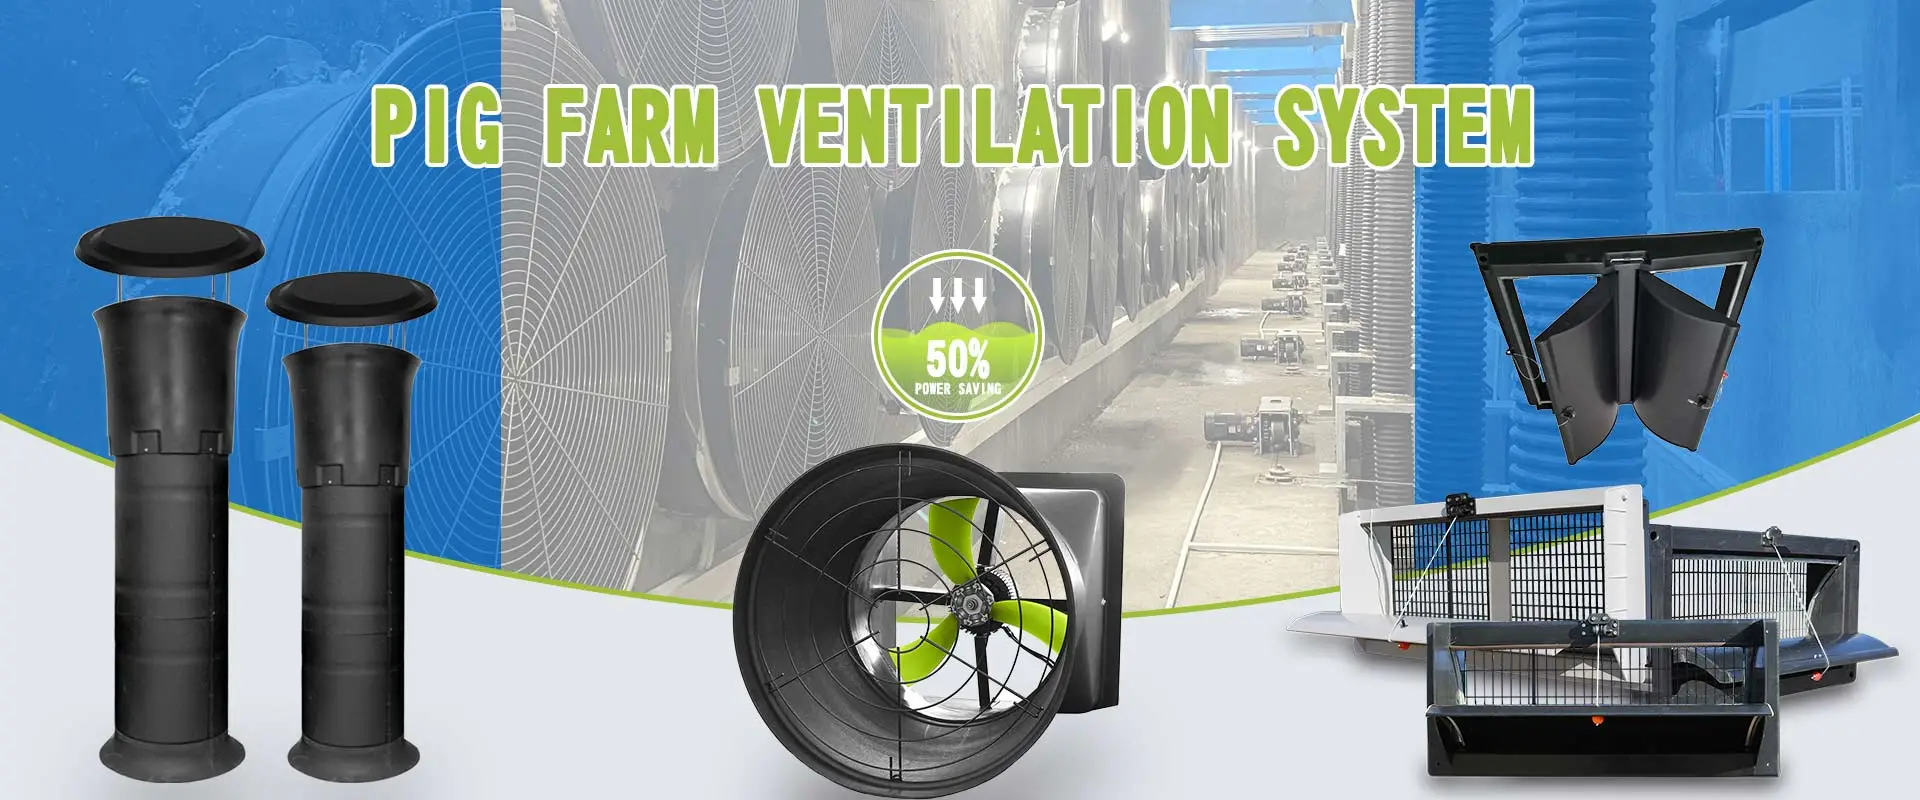 Pig Farm Ventilation System